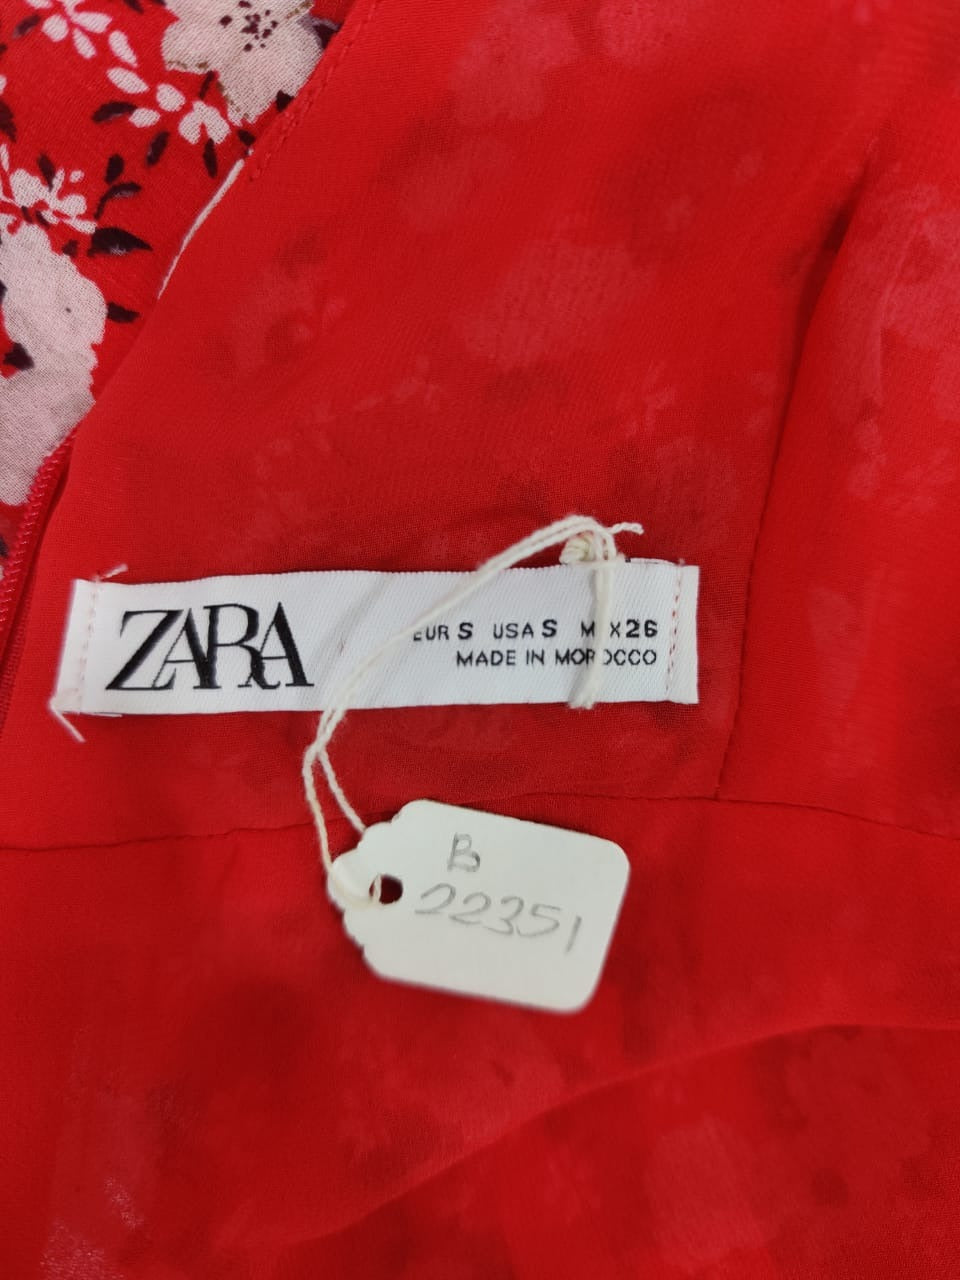 ZARA Red Floral Sleeveless Dress | Relove